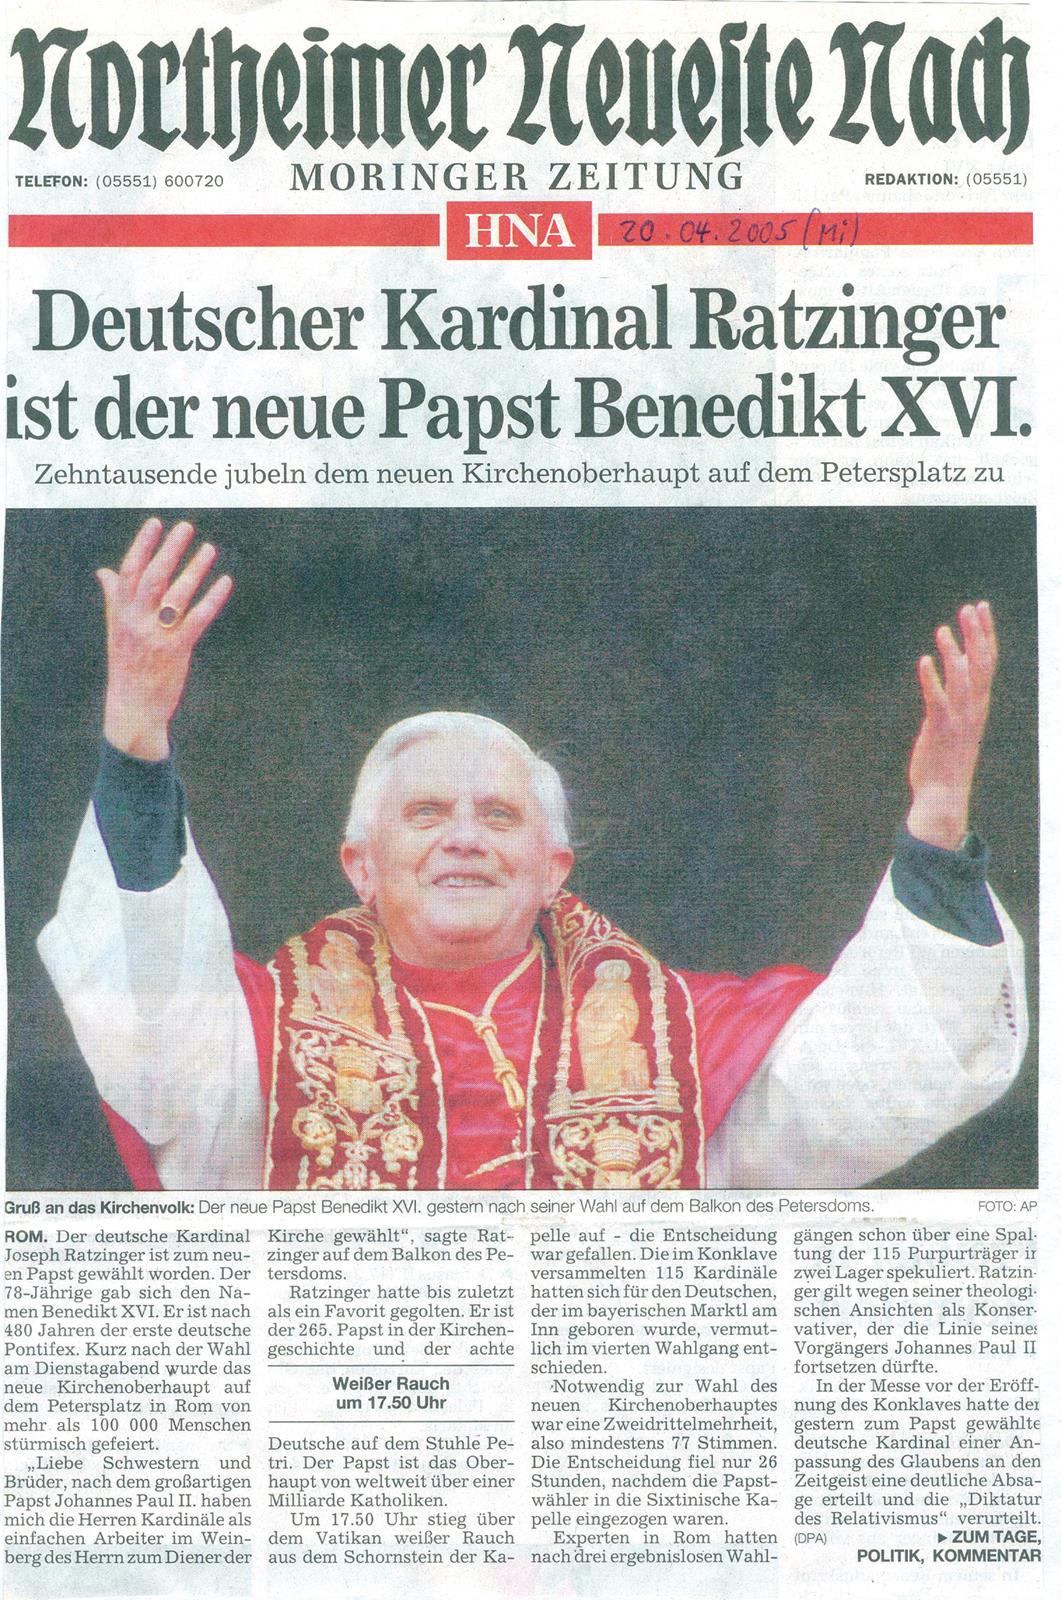 Ratzinger, Joseph Alois | Bild Nr.2